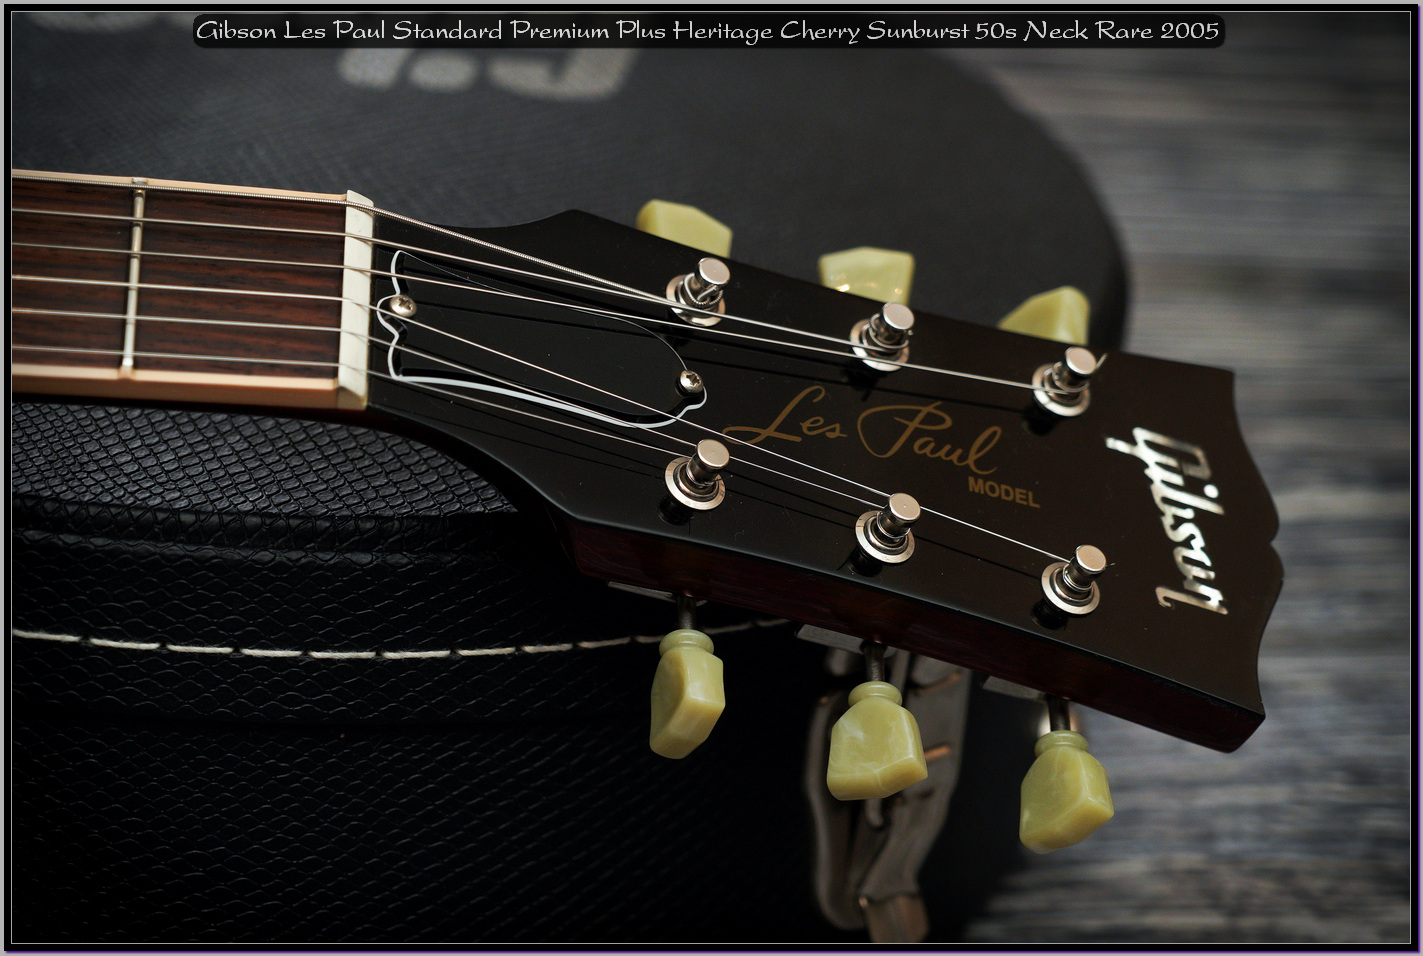 Gibson Les Paul Standard Premium Plus Heritage Cherry Sunburst 50s Neck Rare 2005 08_x1440.jpg